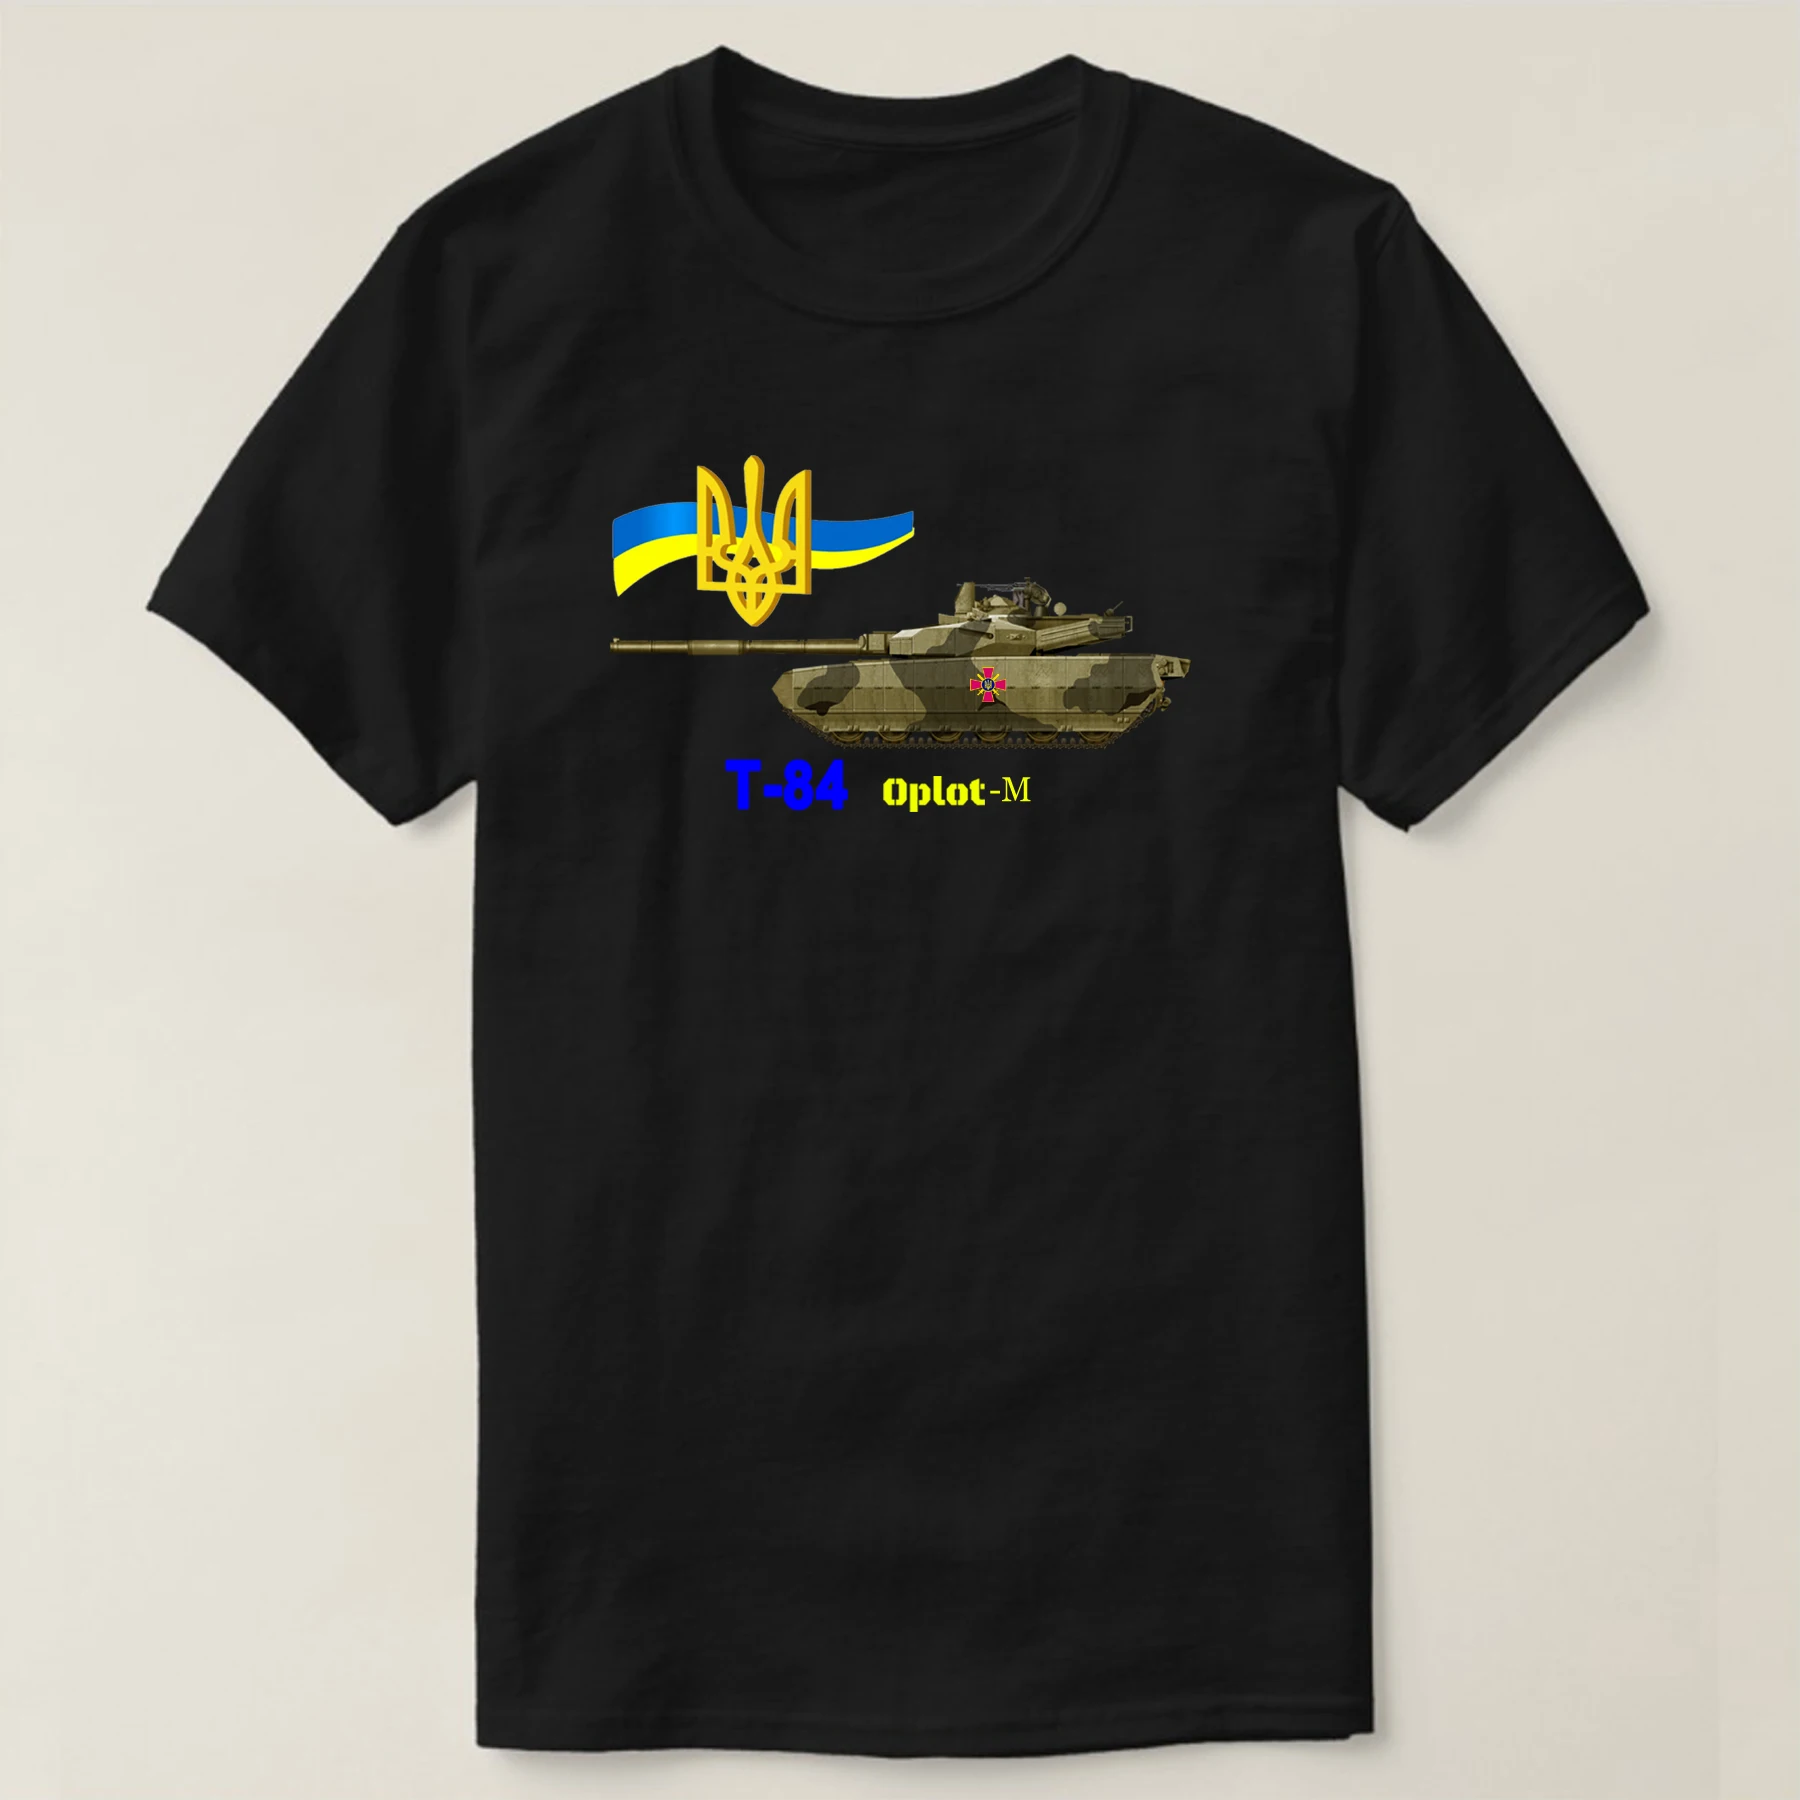 

Ukrainian Ground Forces T-84 Oplot-M Main Battle Tank T Shirt. Short Sleeve 100% Cotton Casual T-shirts Loose Top Size S-3XL